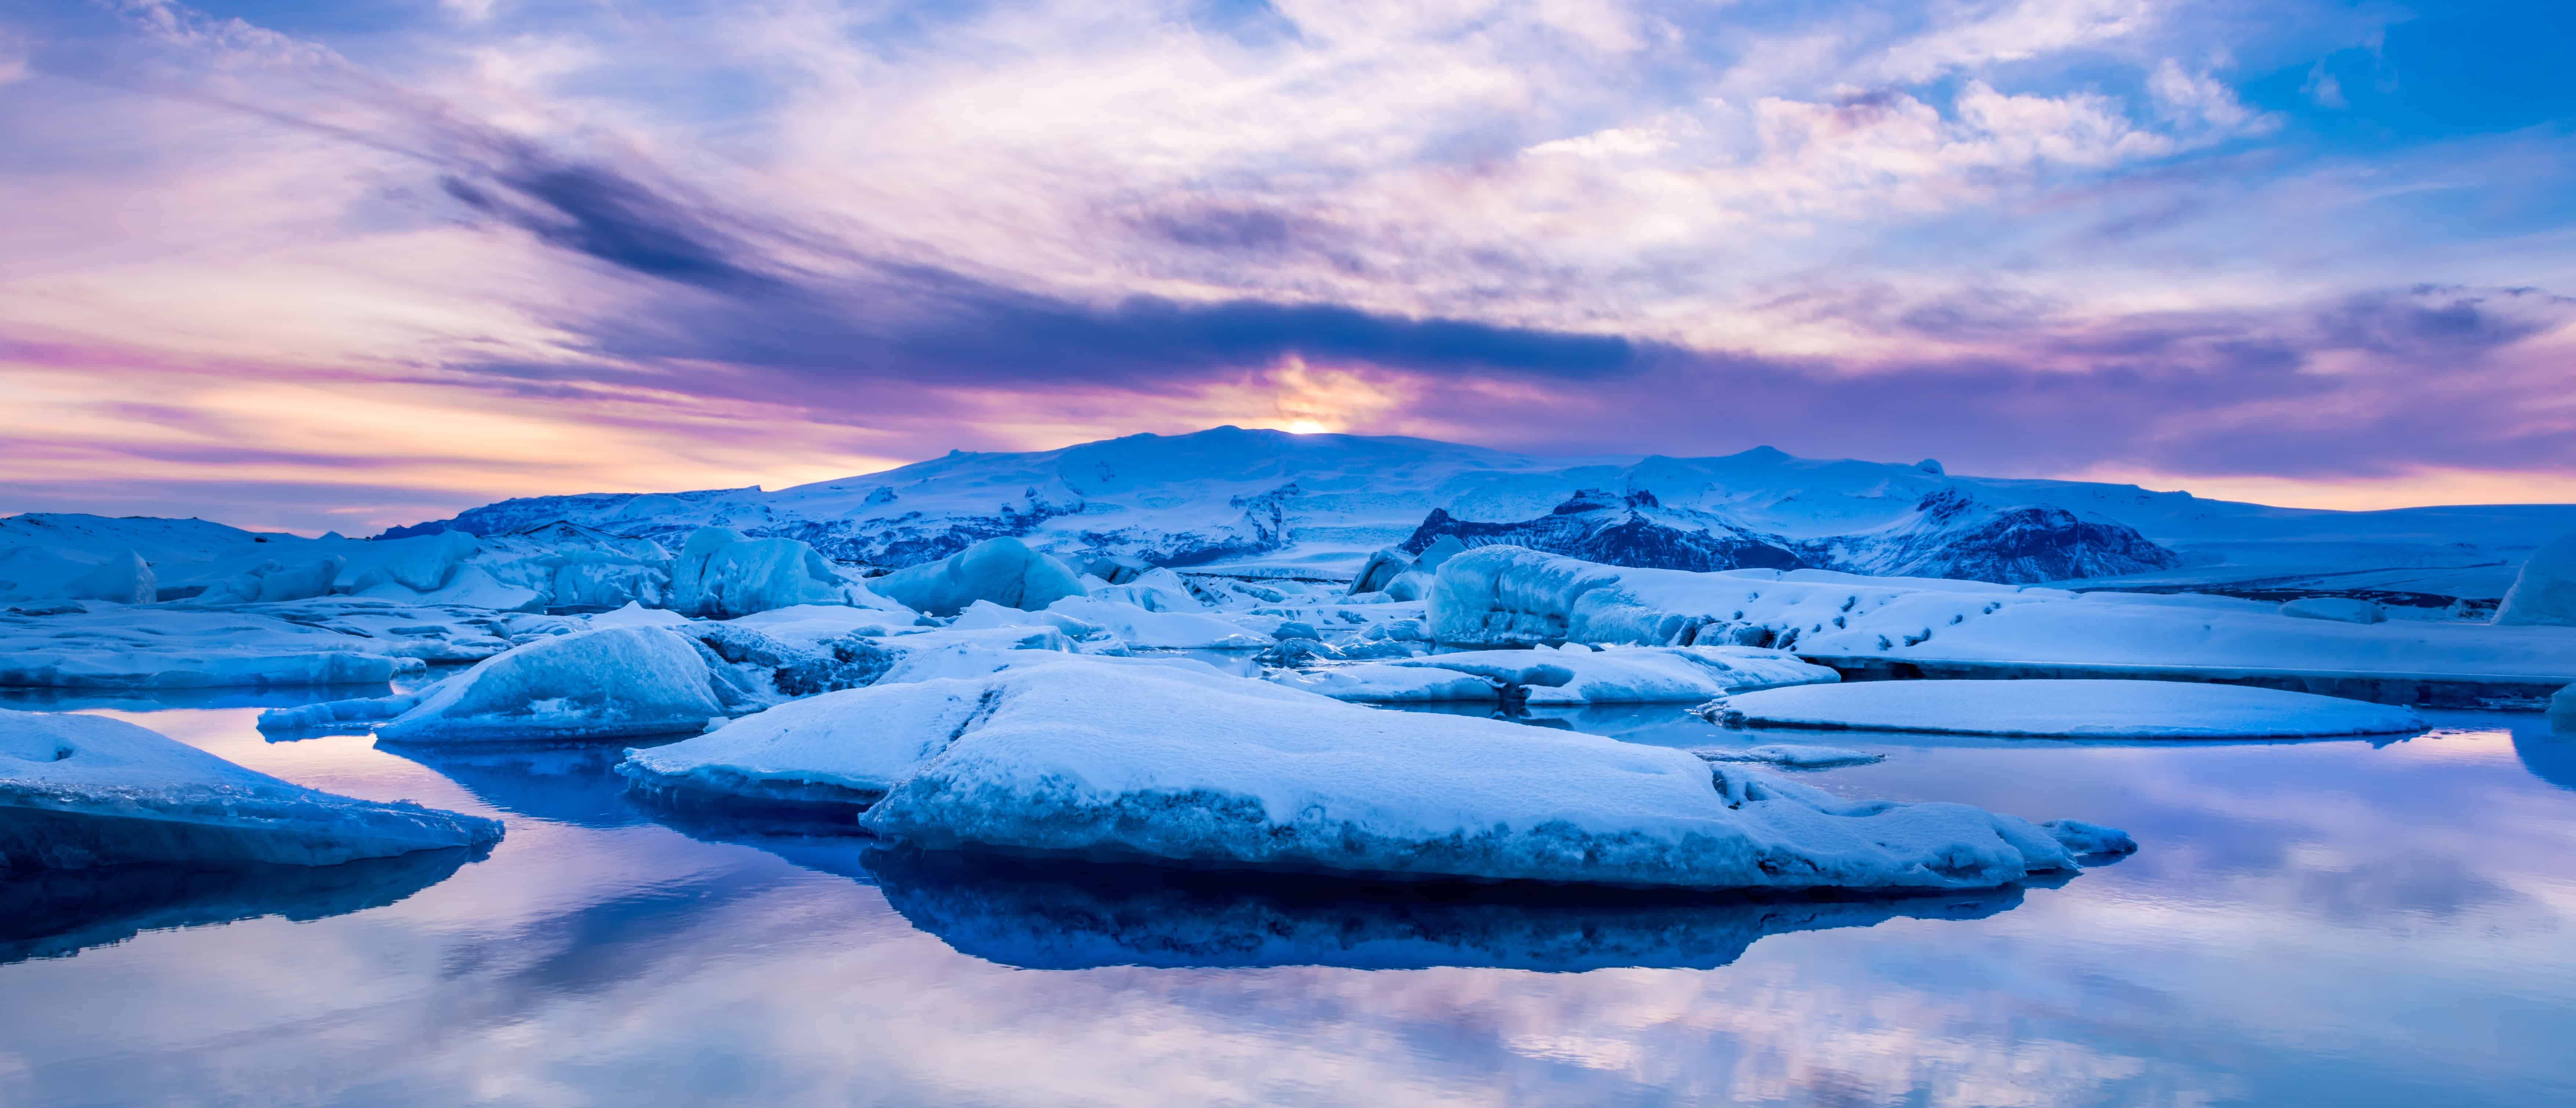 Iceland_Travel_Shutterstock (14)